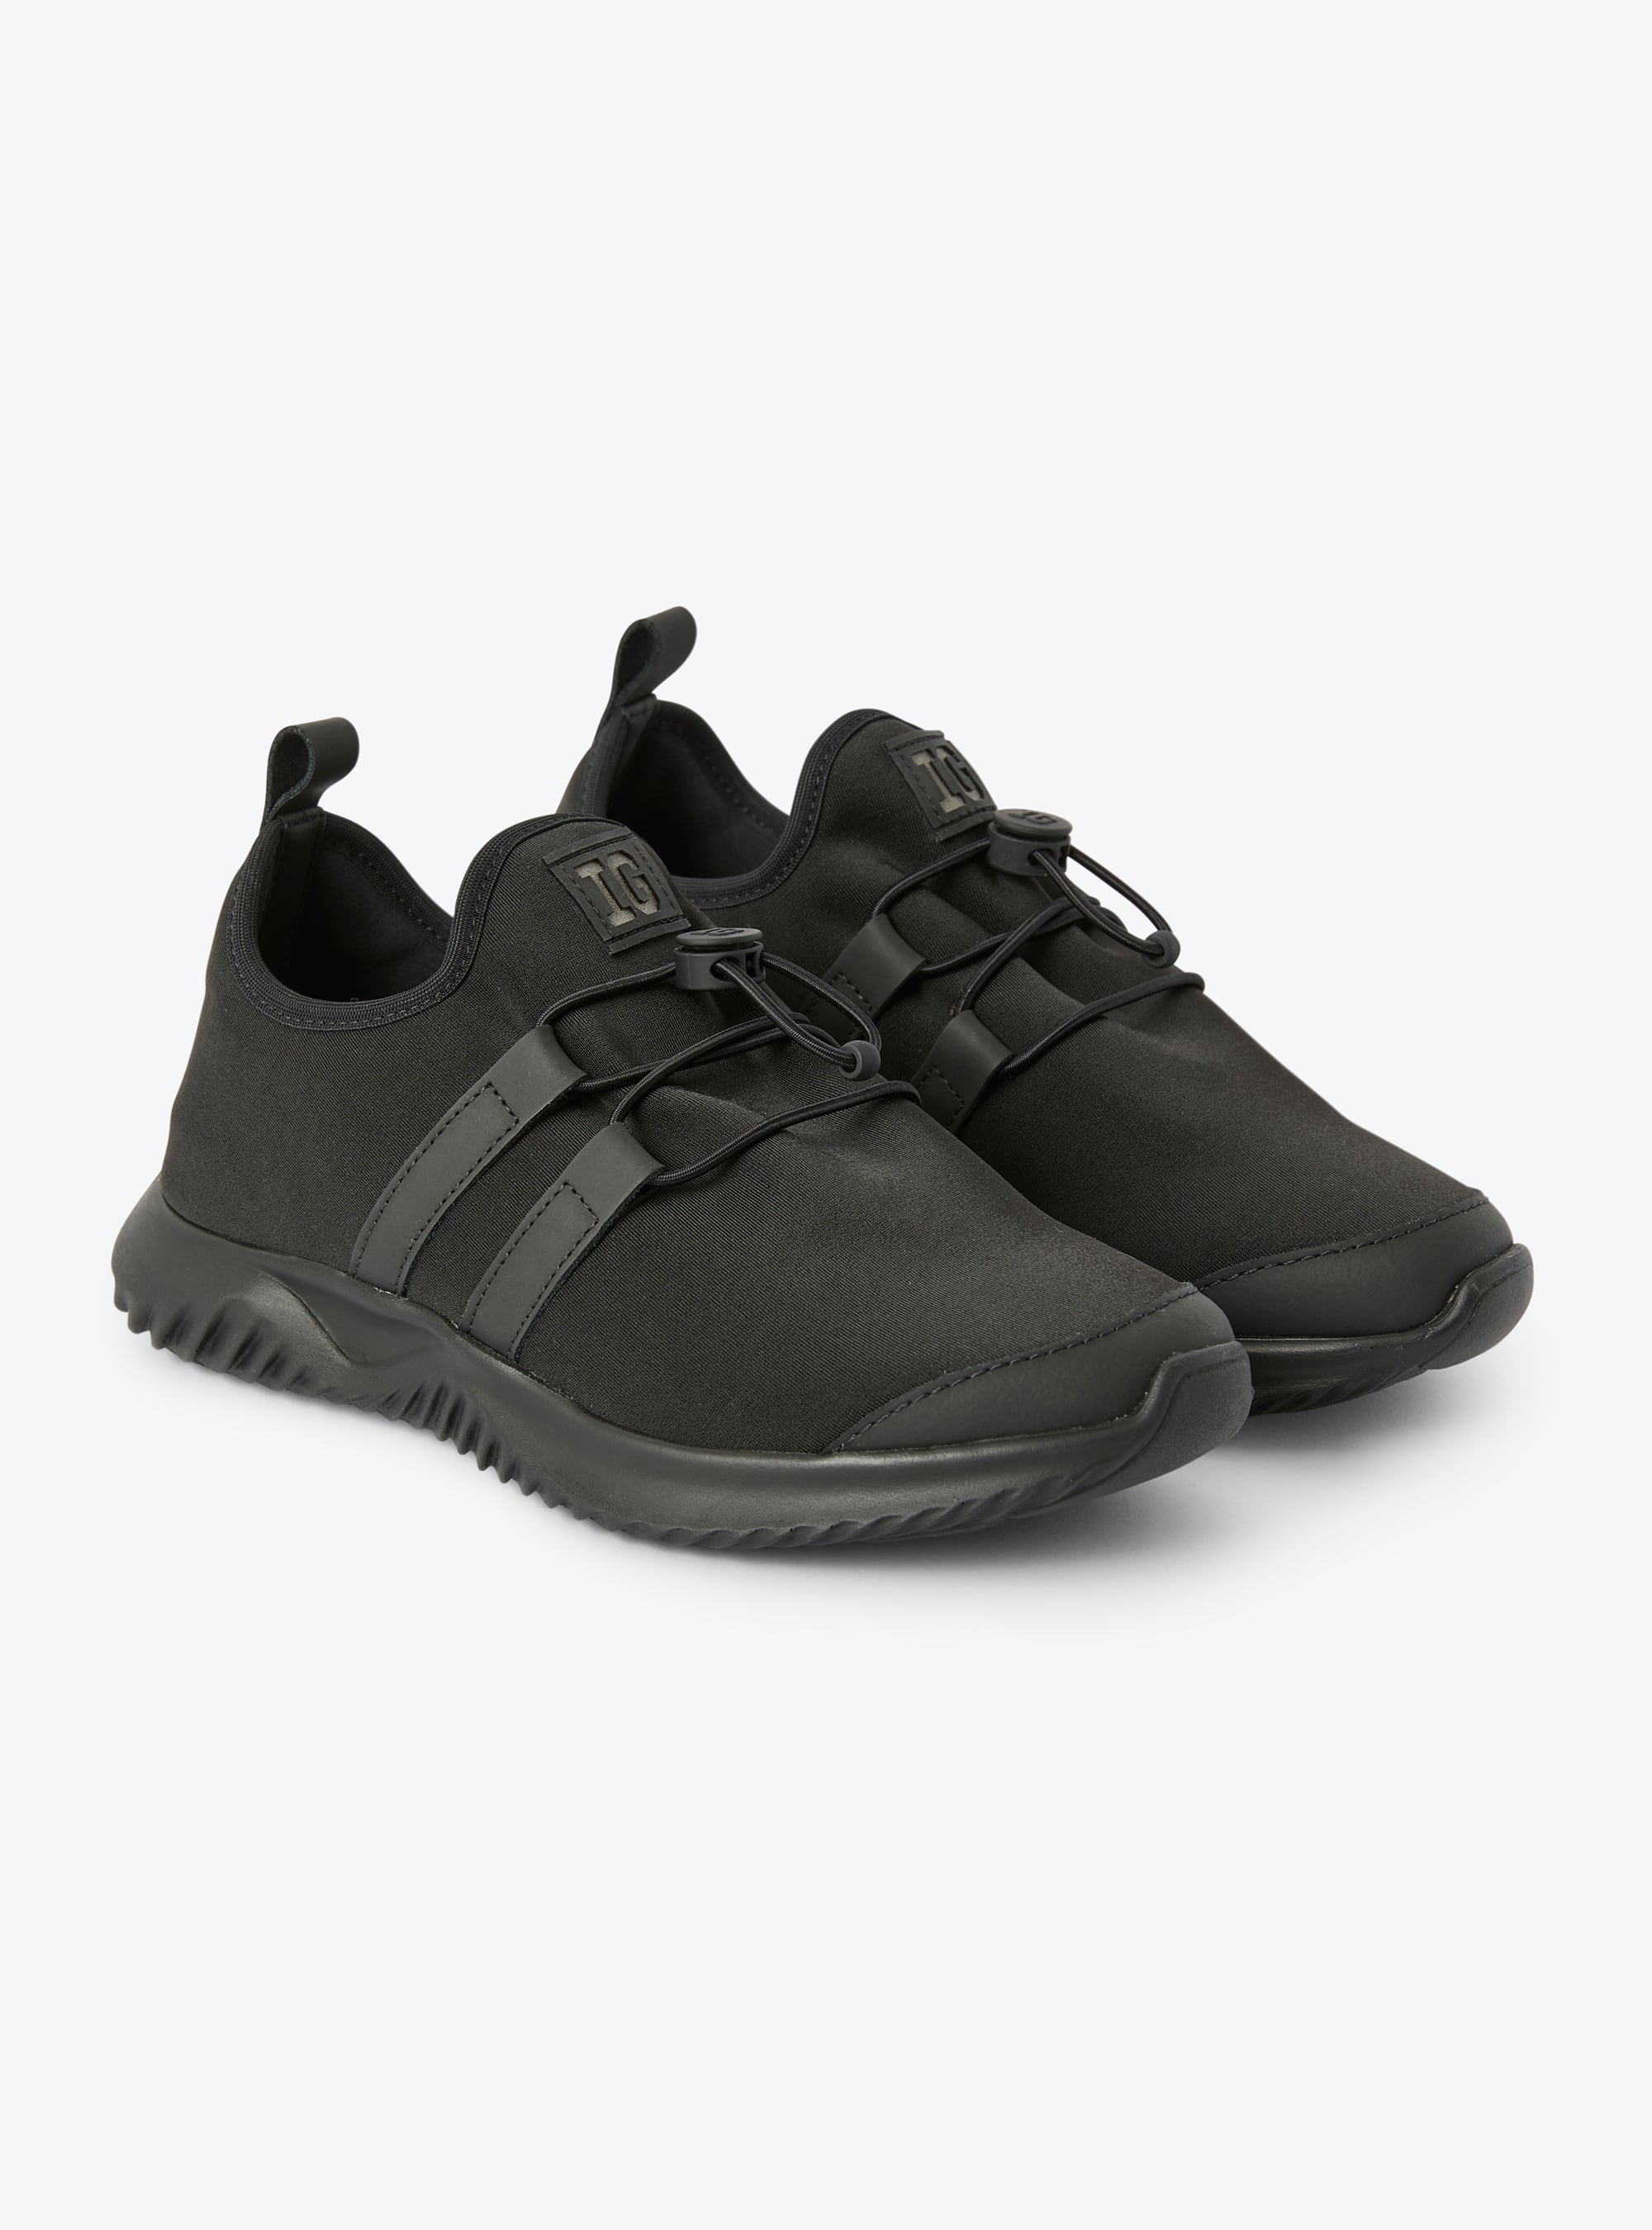 IG sneaker in black neoprene - Shoes - Il Gufo